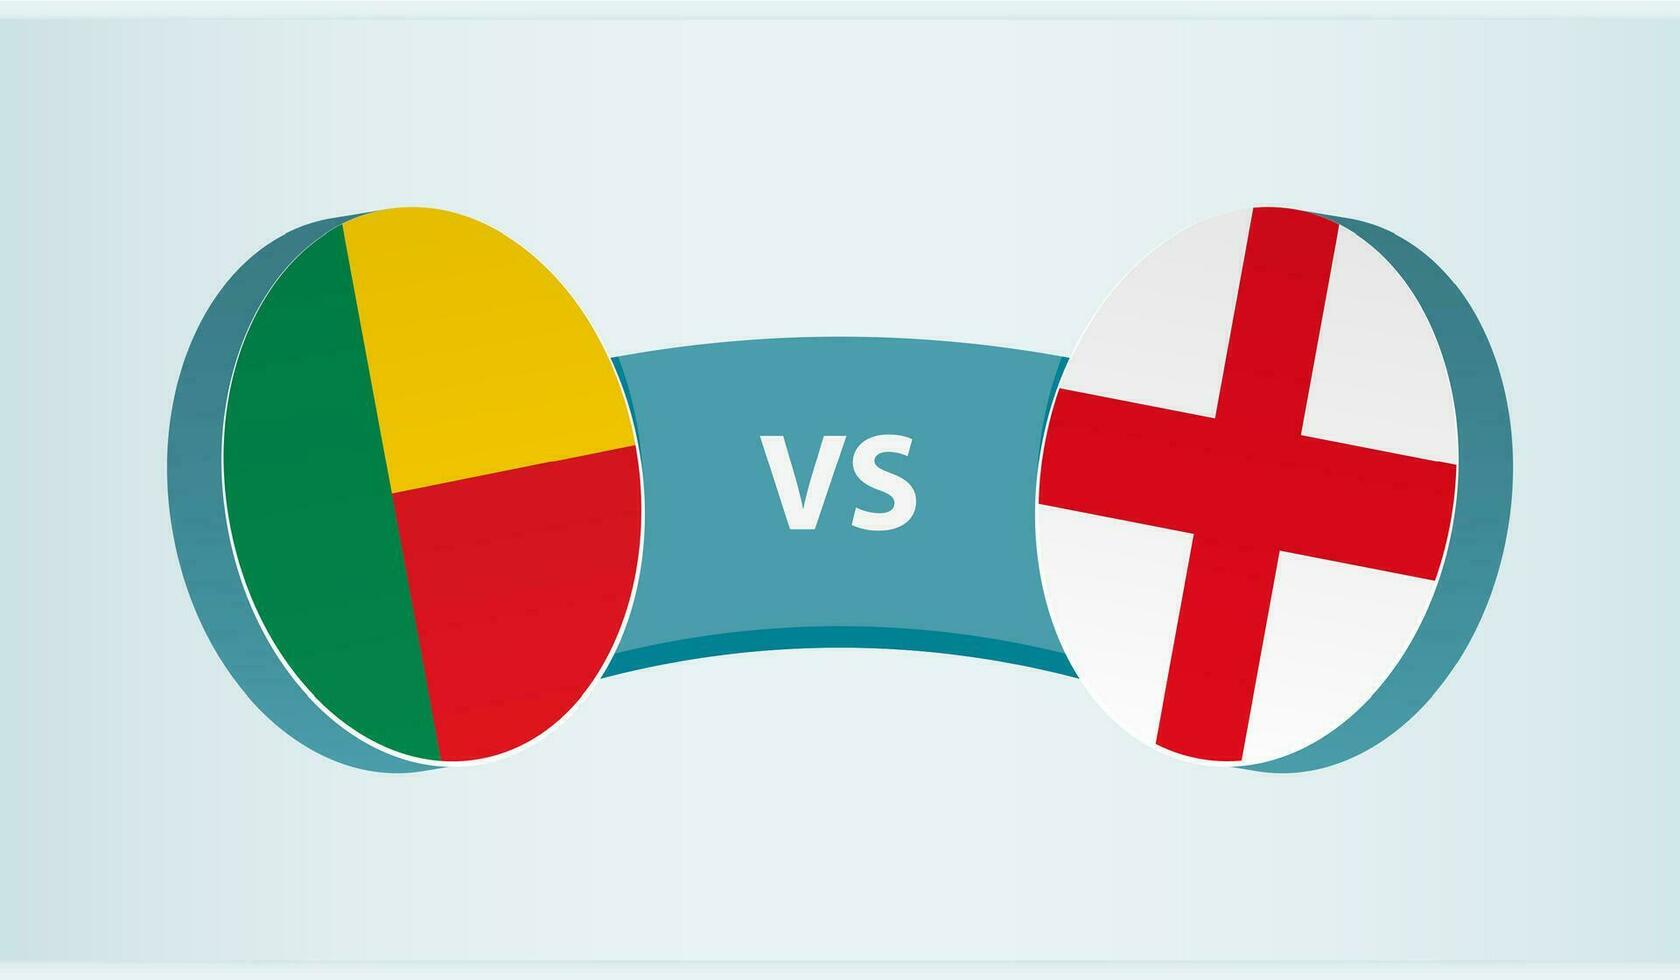 Benin versus England, team sports competition concept. vector